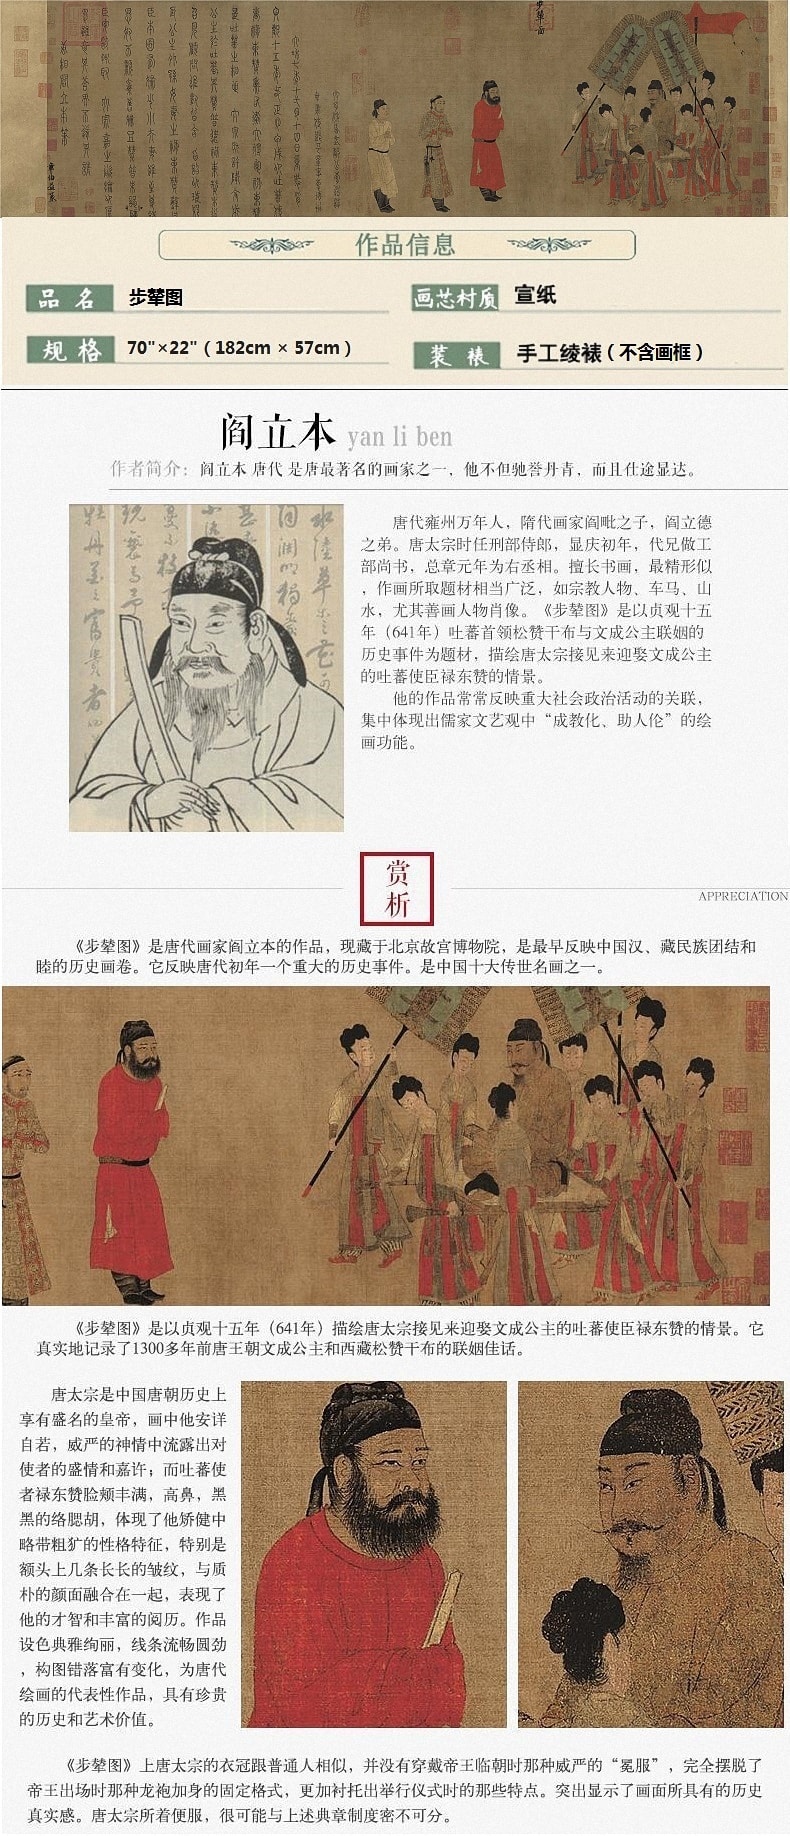 Chinese Painting of Emperor Taizong Receiving the Tibetan Envoy